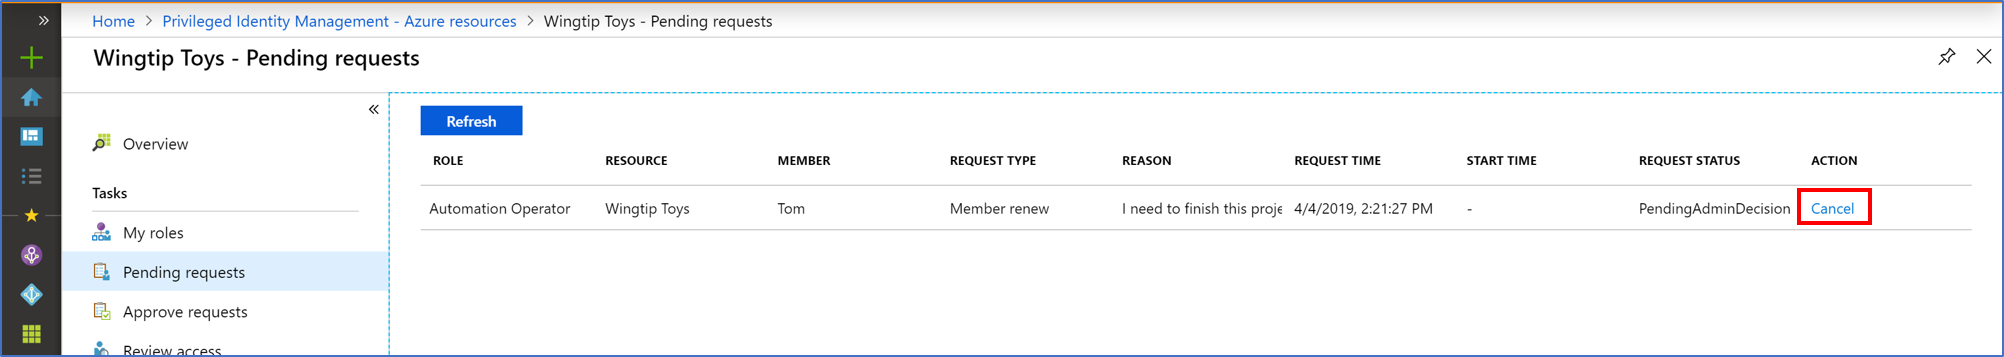 “Azure 资源 - 挂起的请求”页的屏幕截图，其中列出任何挂起的请求和“取消”链接。